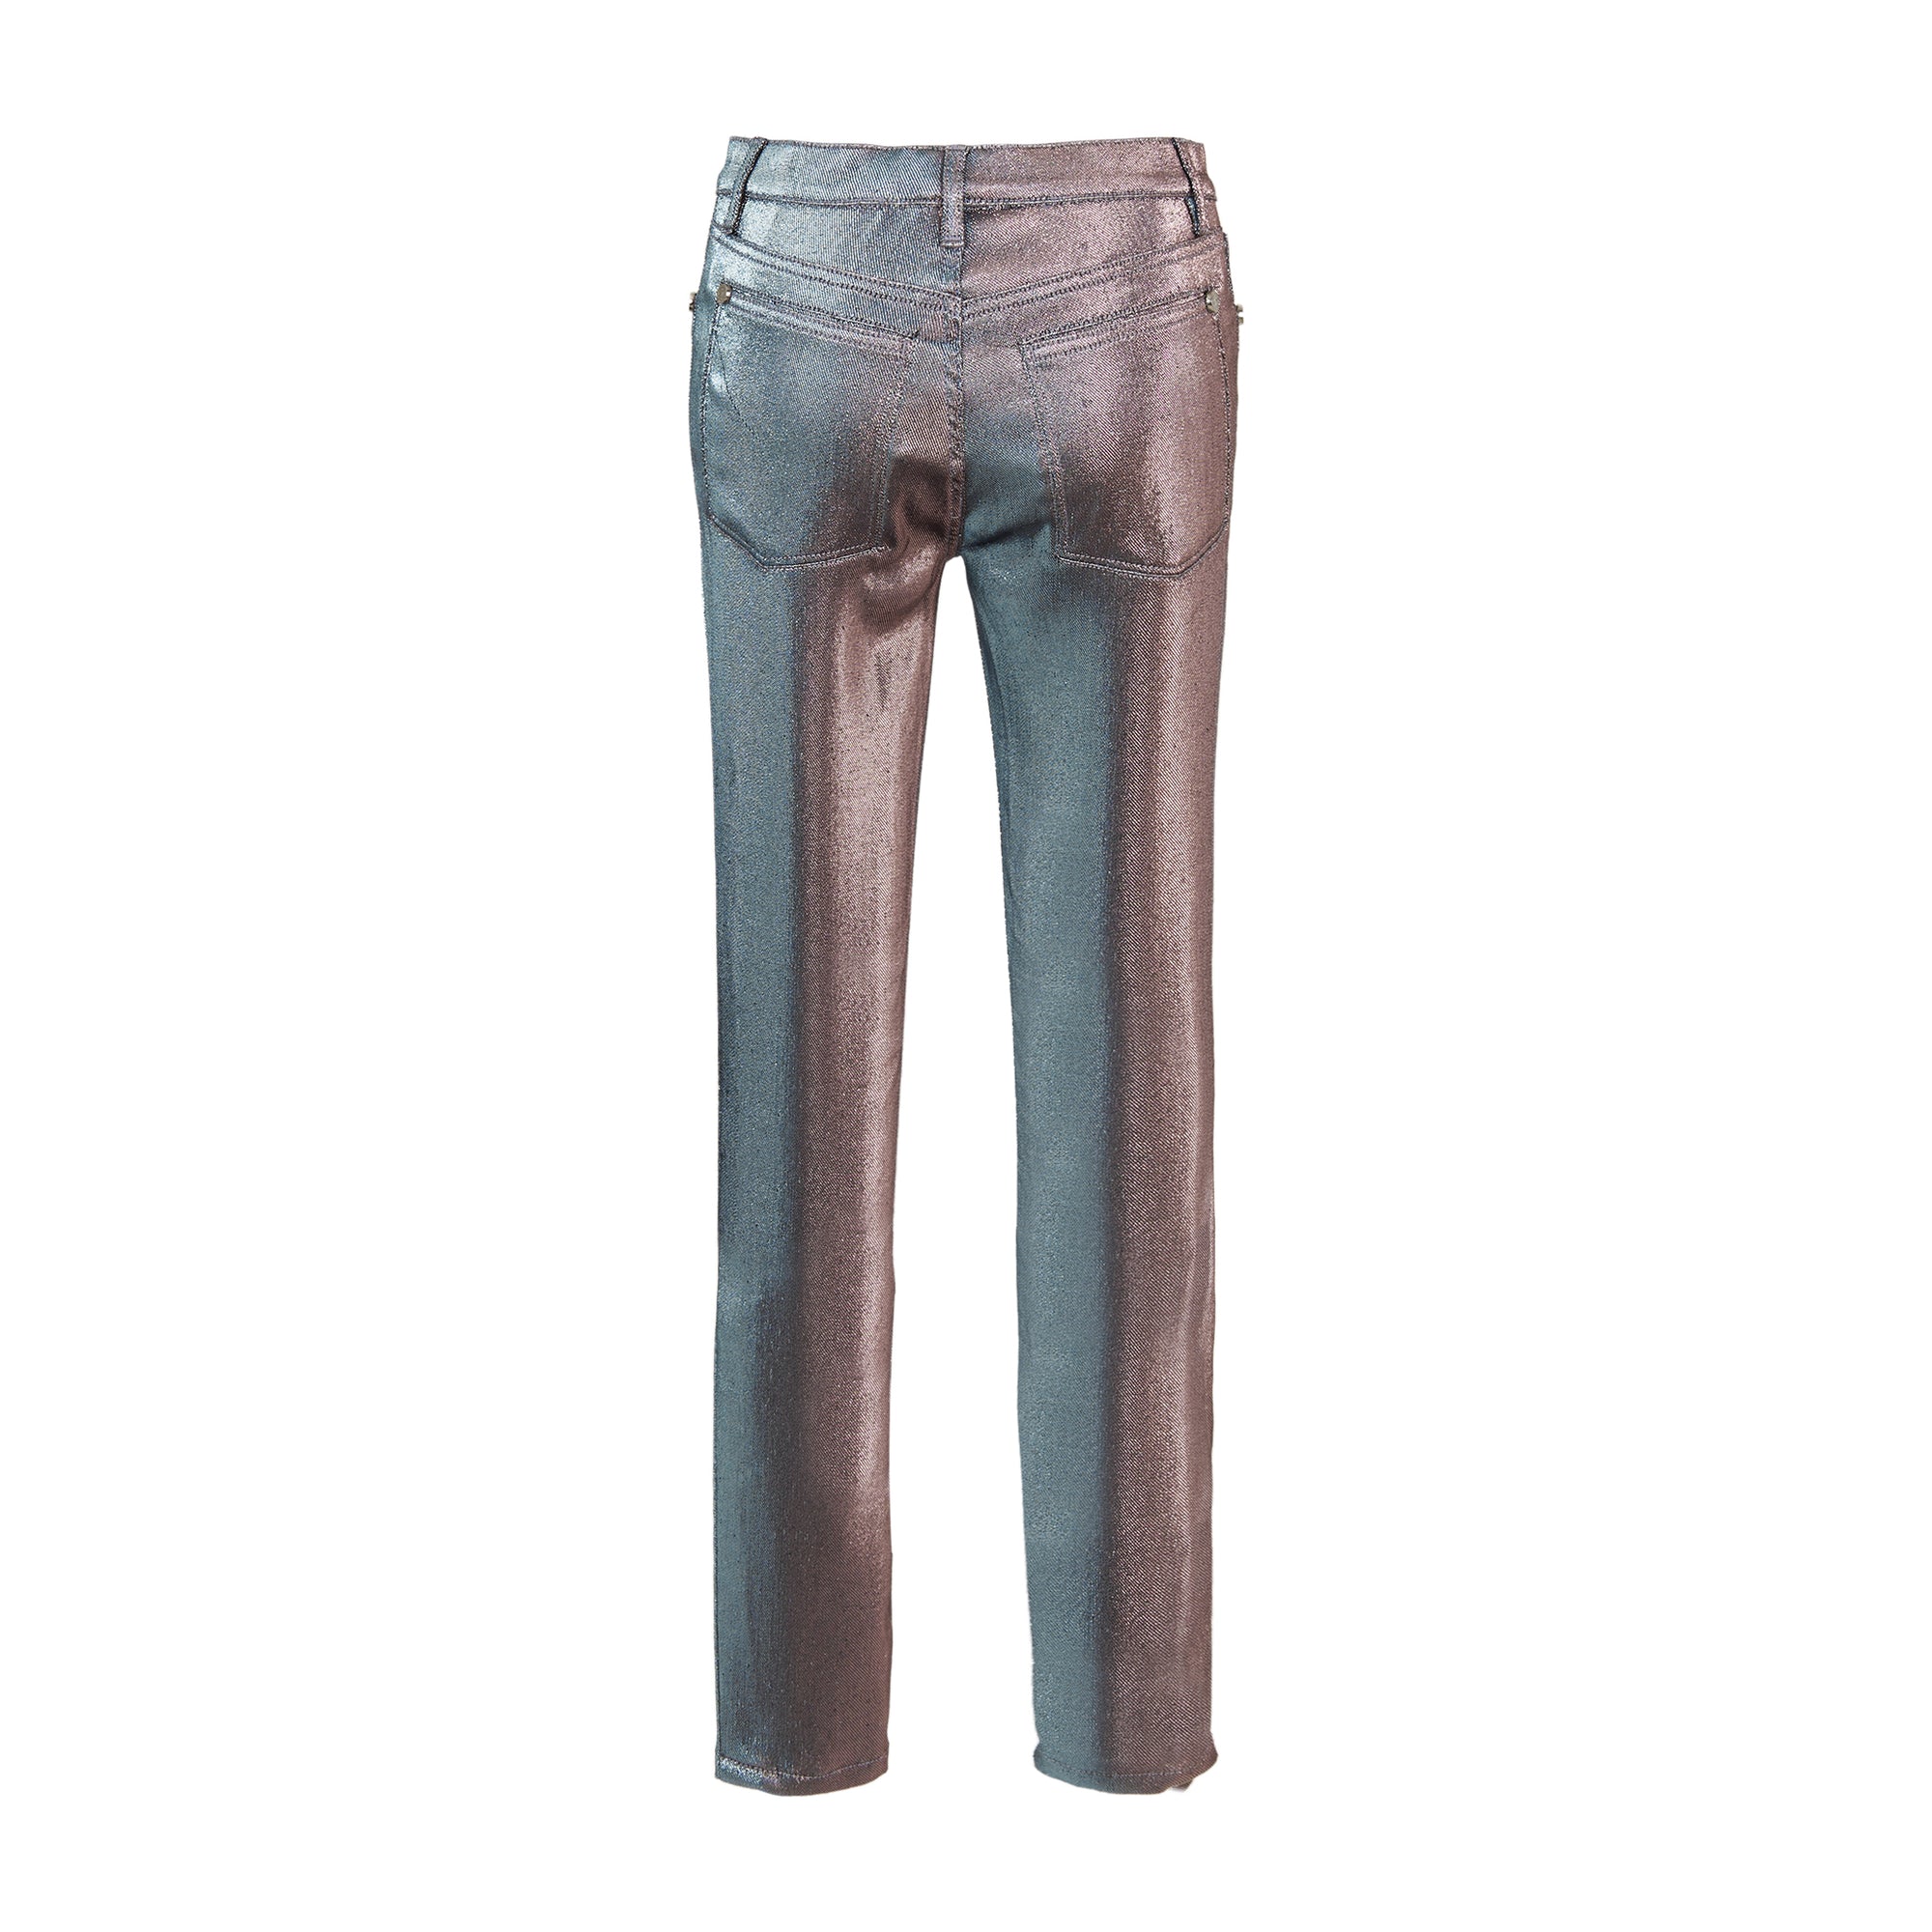 Chanel Iridescent Pants